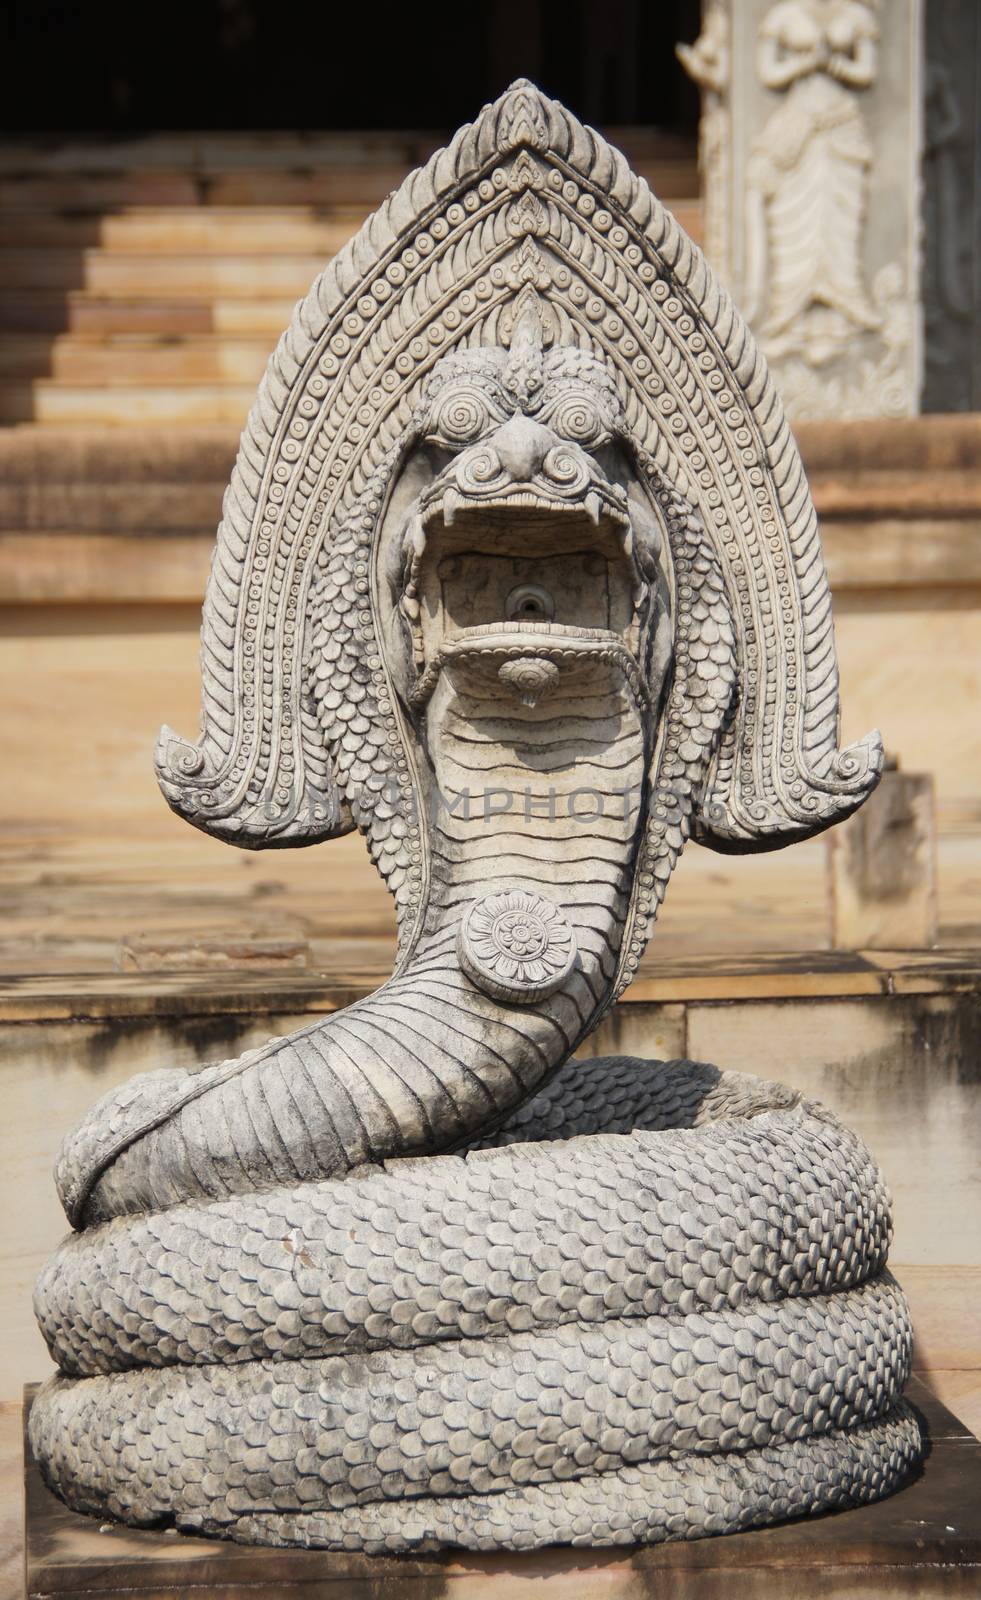 Stone sculpture art anaconda remains a national public Thailand. by Noppharat_th